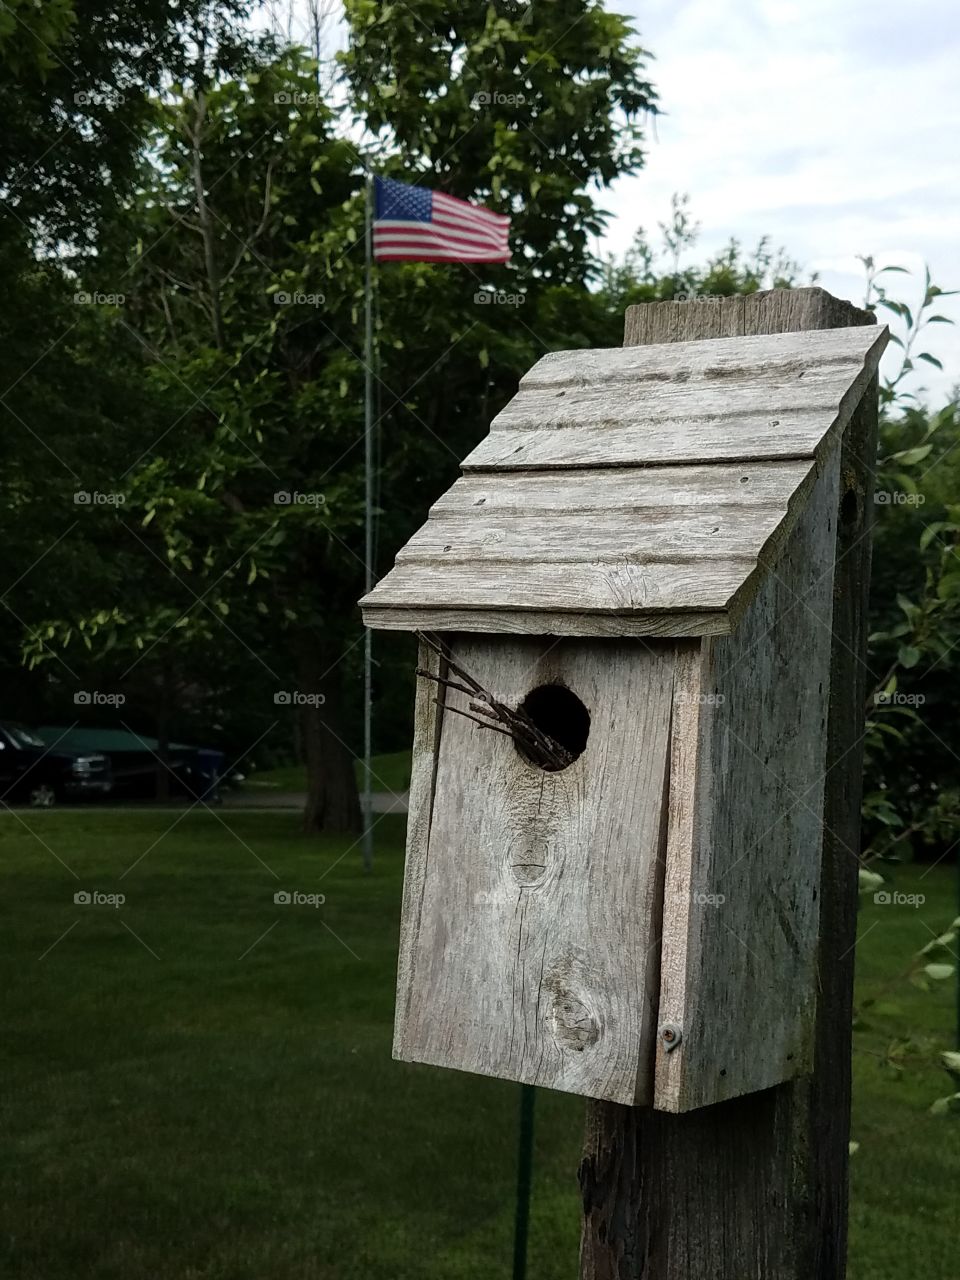 American Flag over Birdhouse